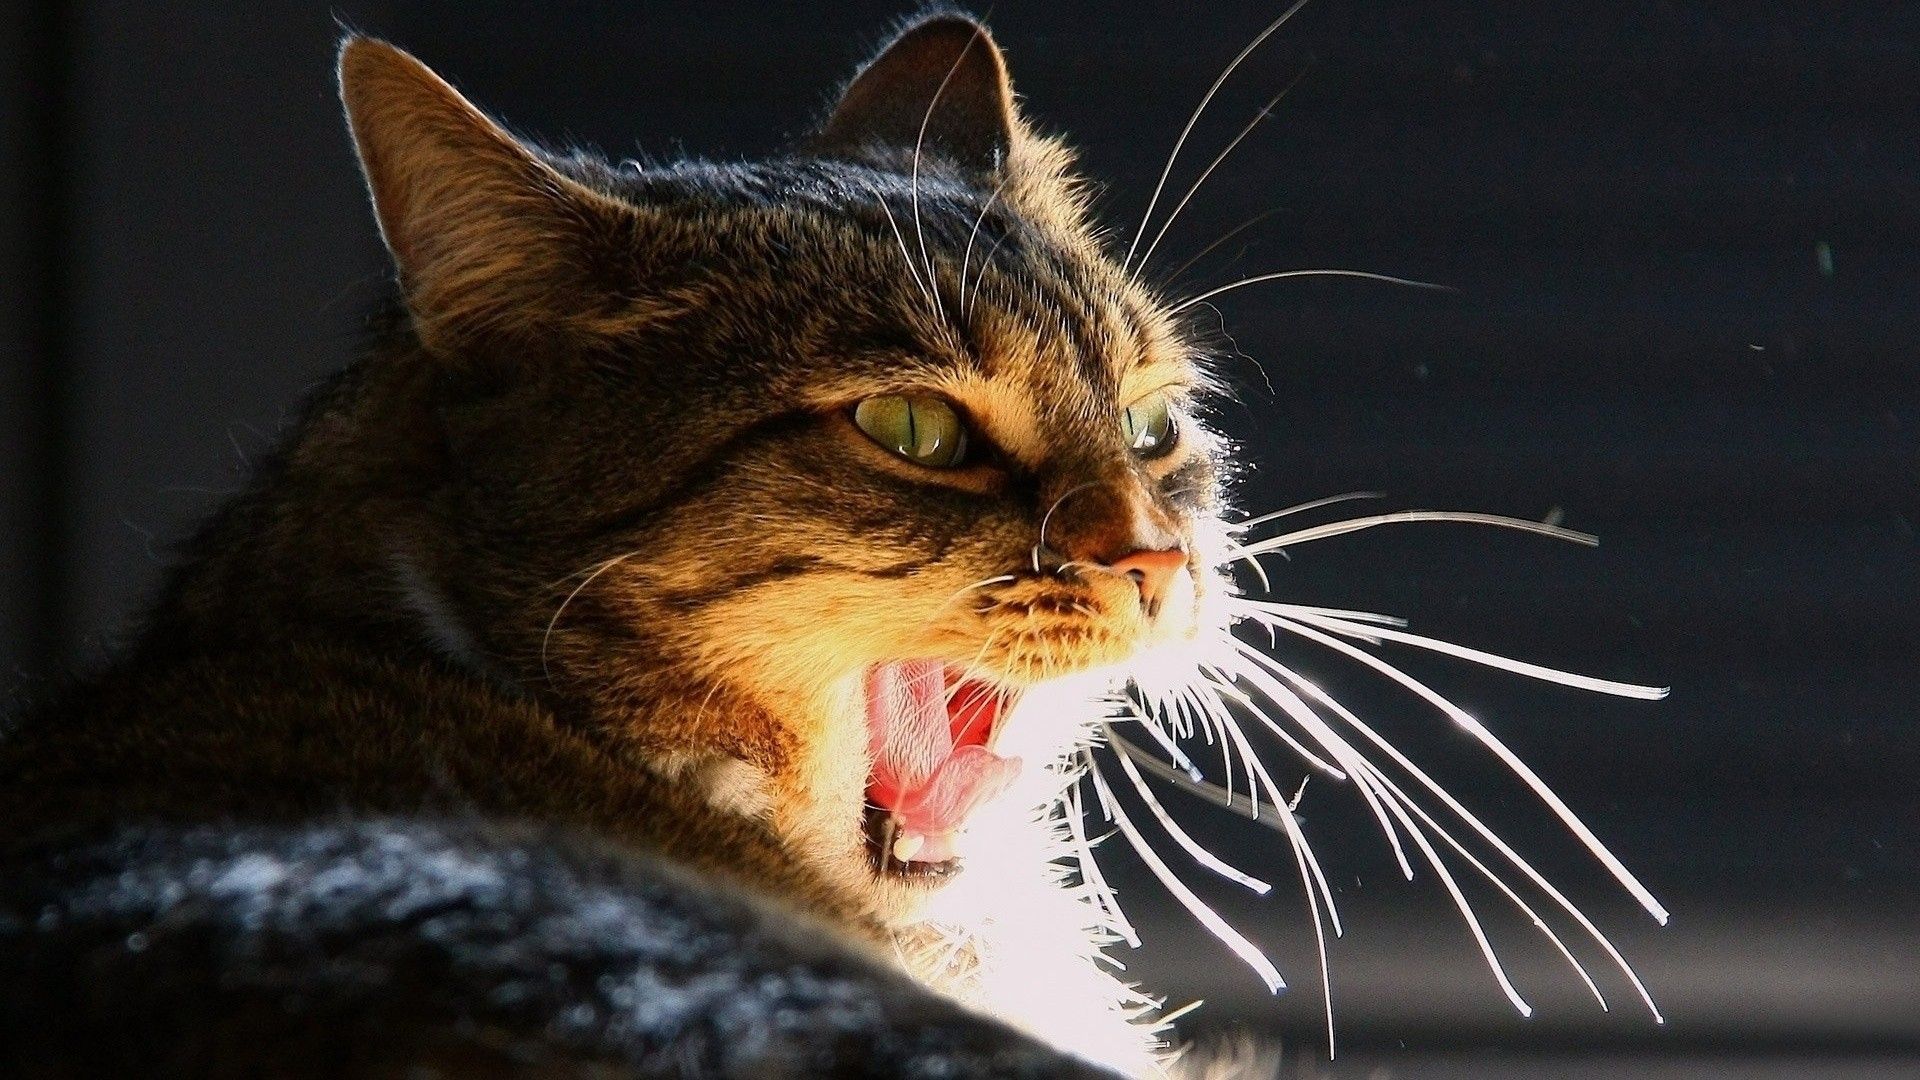 Animals cats feline angry fierce pet 1920x1080. Cat yawning, Cats, Yawning animals